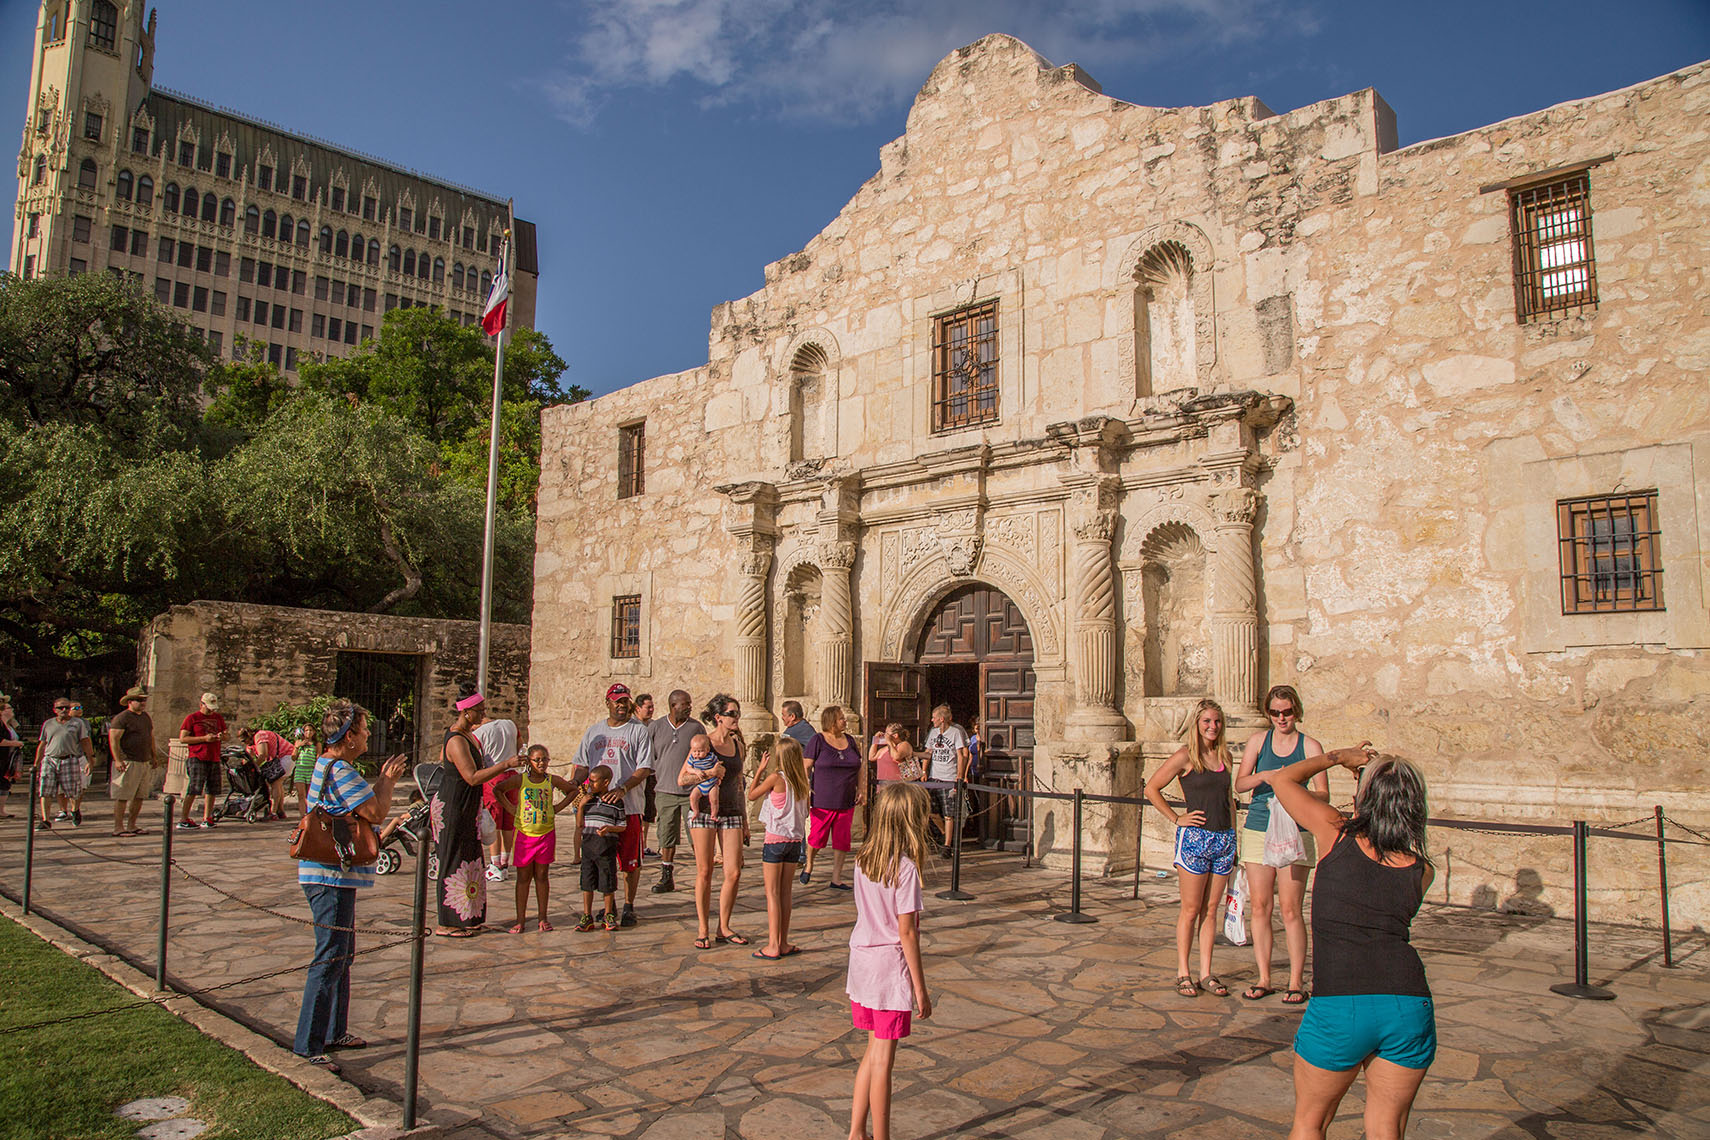 1038Tourists take pictures at the The Alamo, San Antonio